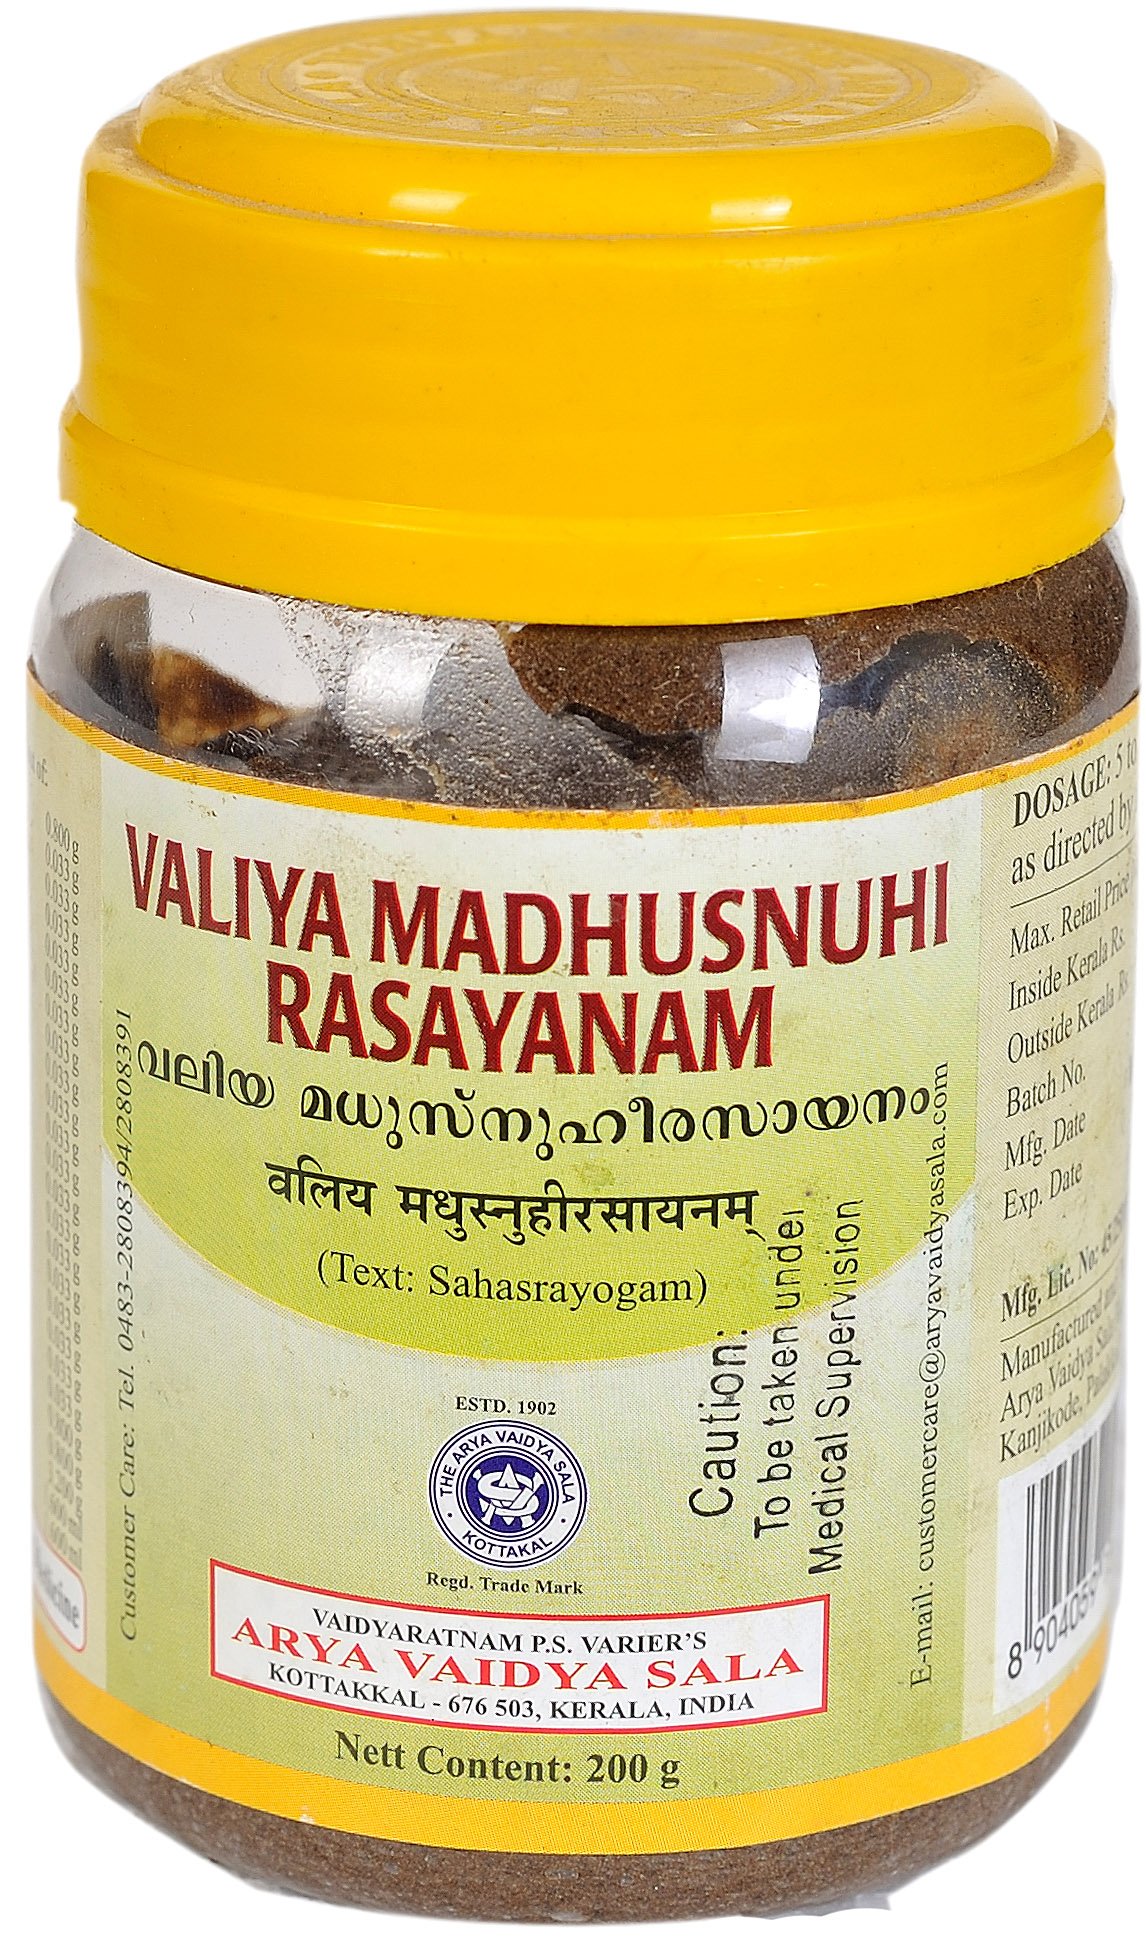 Valiya Madhusnuhi Rasayanam - book cover